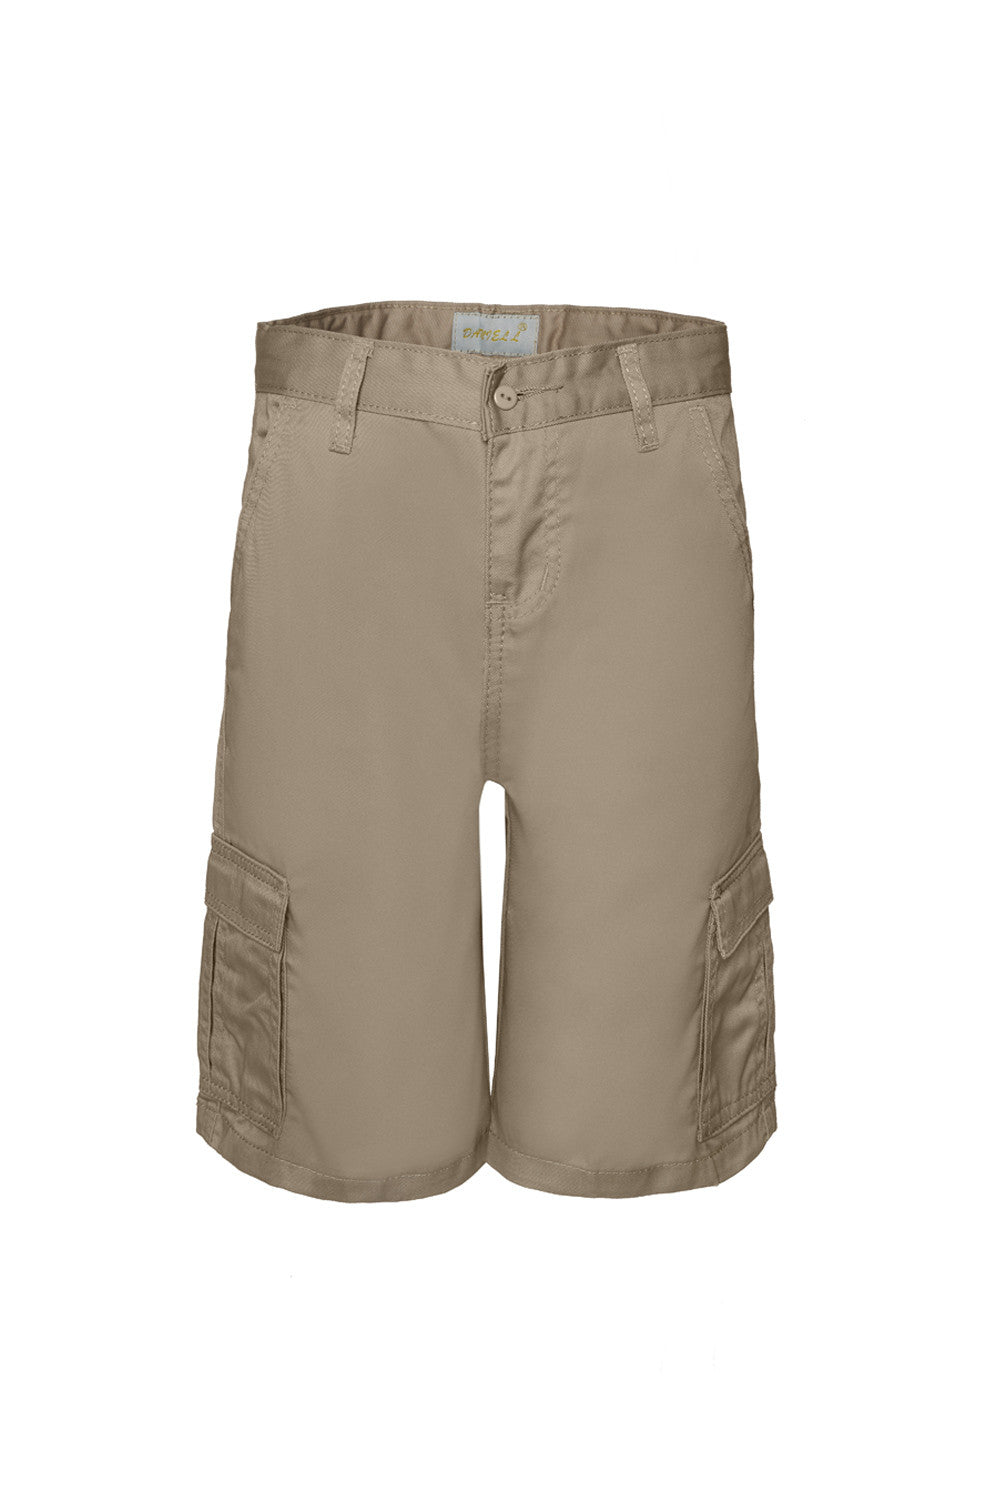 Boy Cargo Shorts | Daniel L Brand (CLEARANCE ITEM)